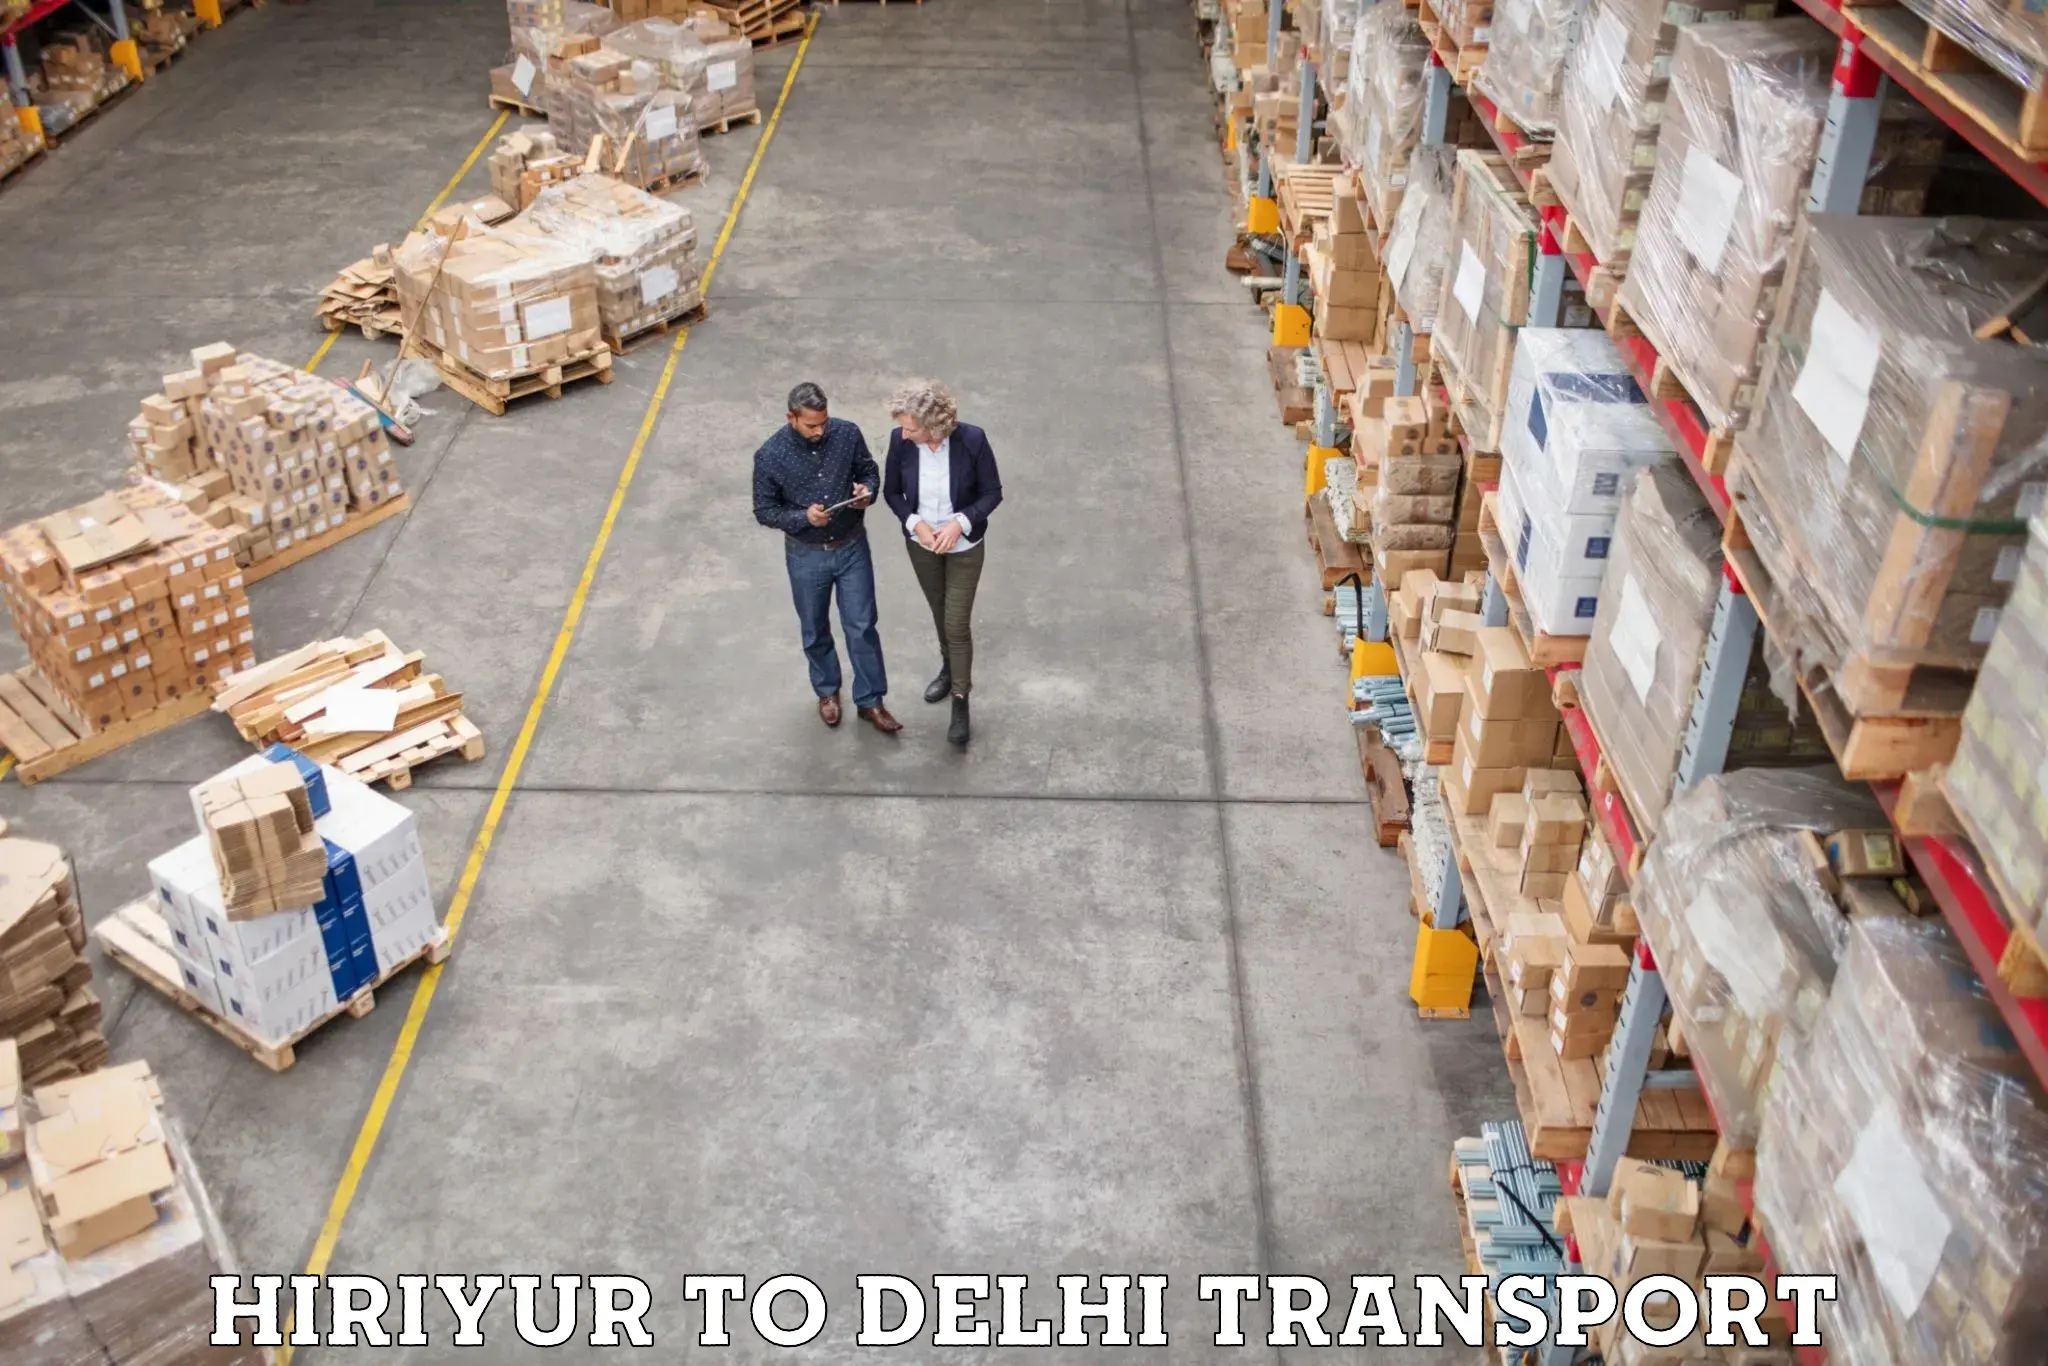 Commercial transport service Hiriyur to Delhi